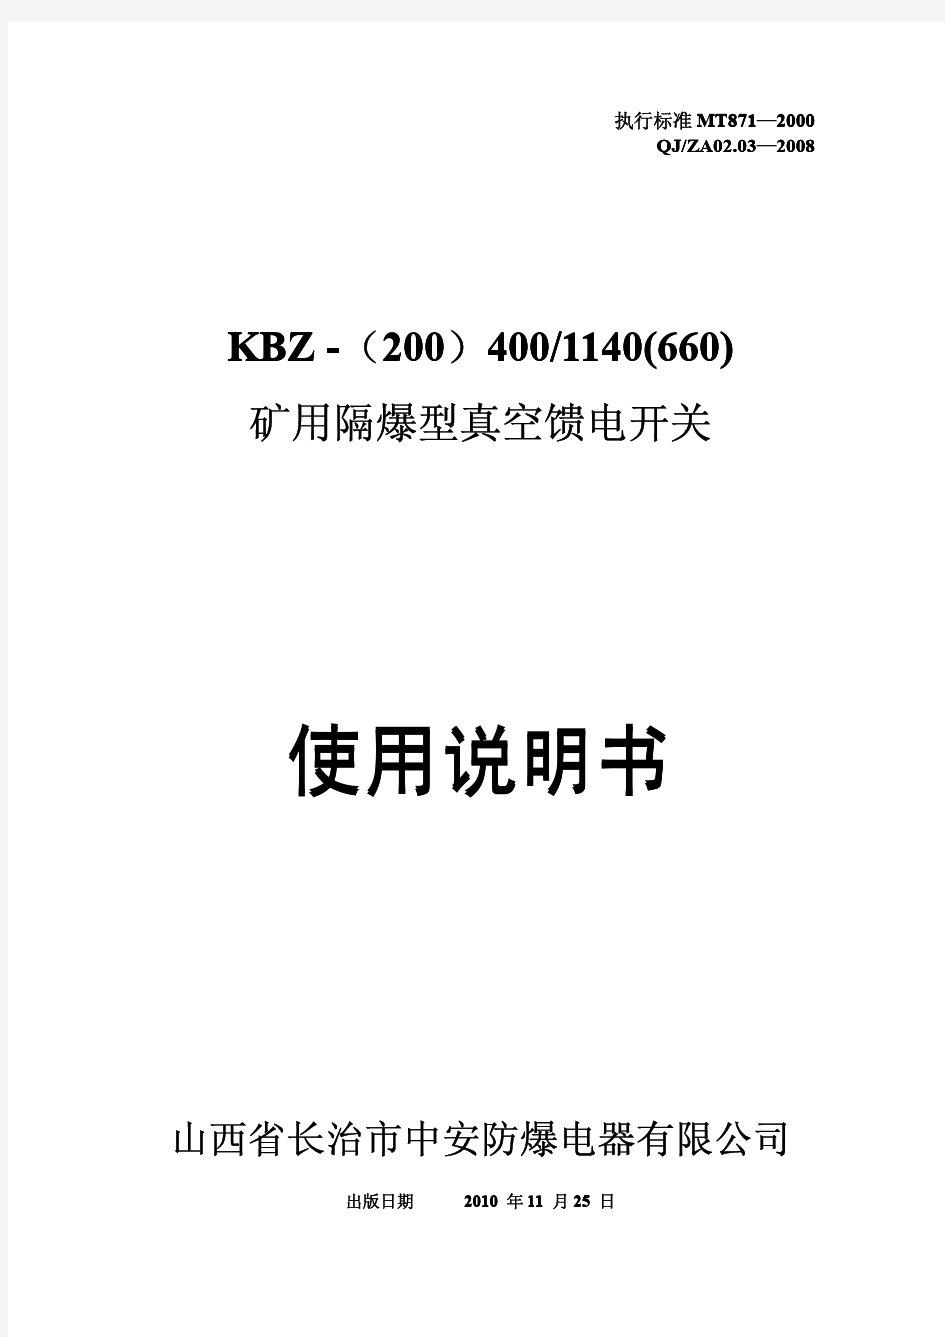 KBZ-400馈电说明书(ZBK机械维持)